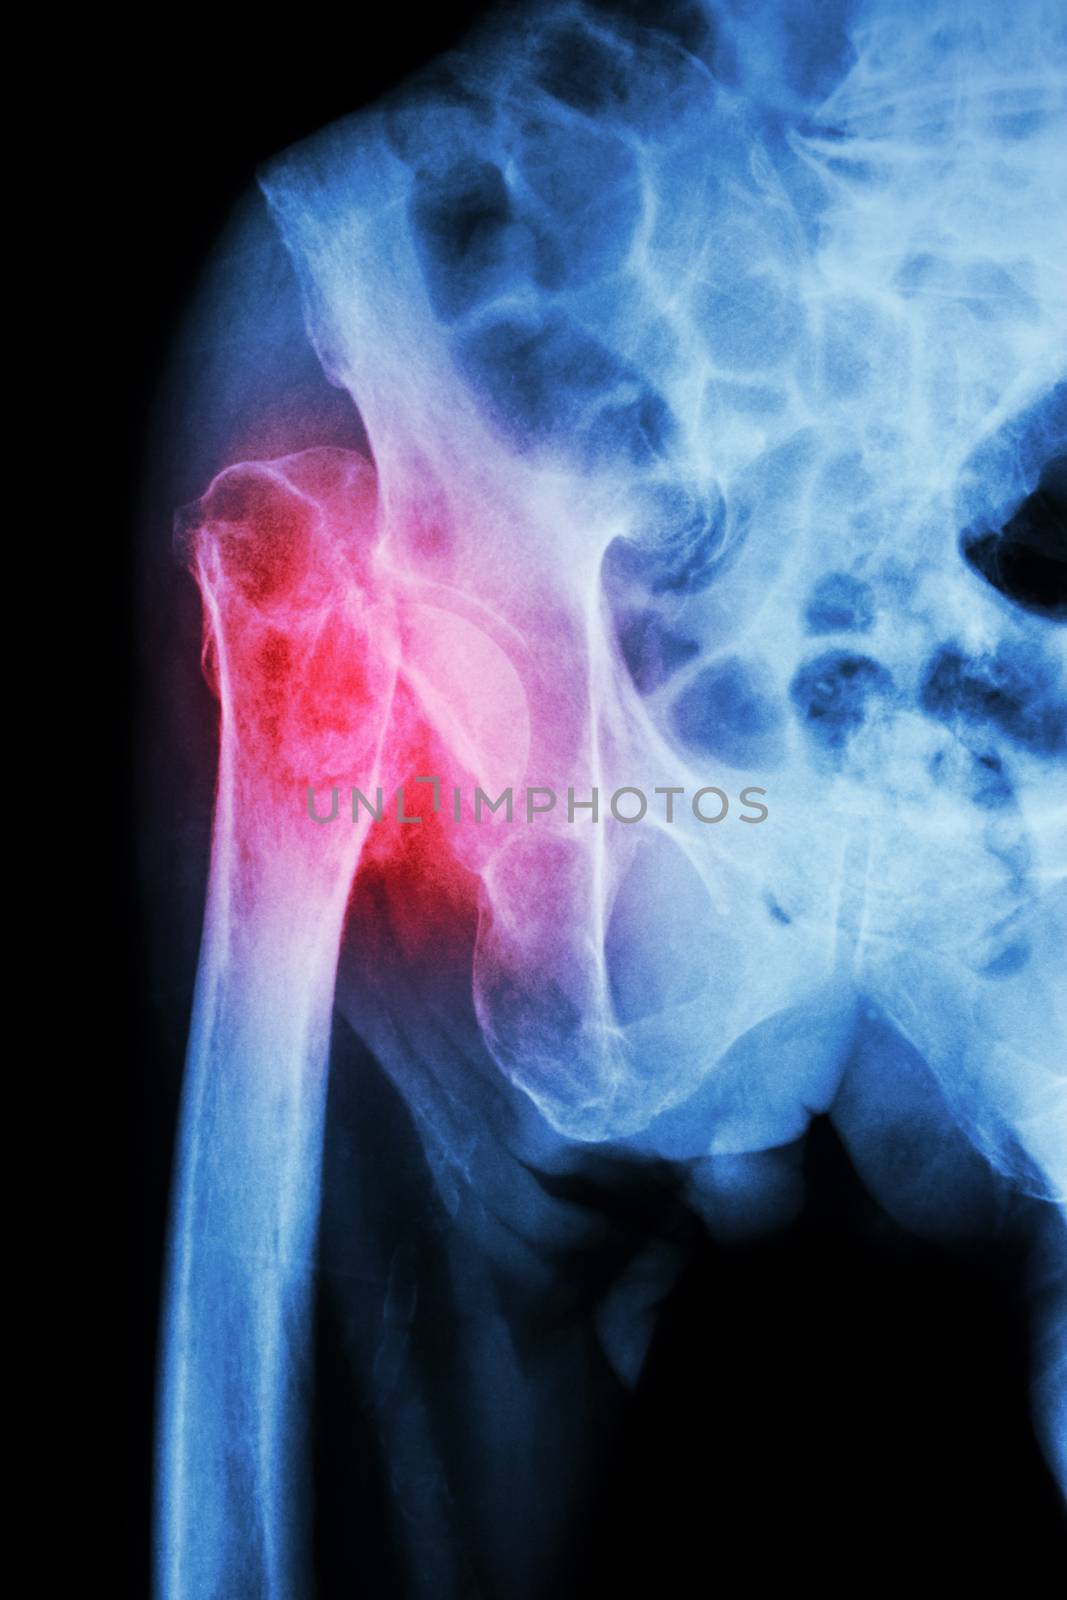 X-ray pelvis & hip joint : Fracture head of femur (thigh bone)